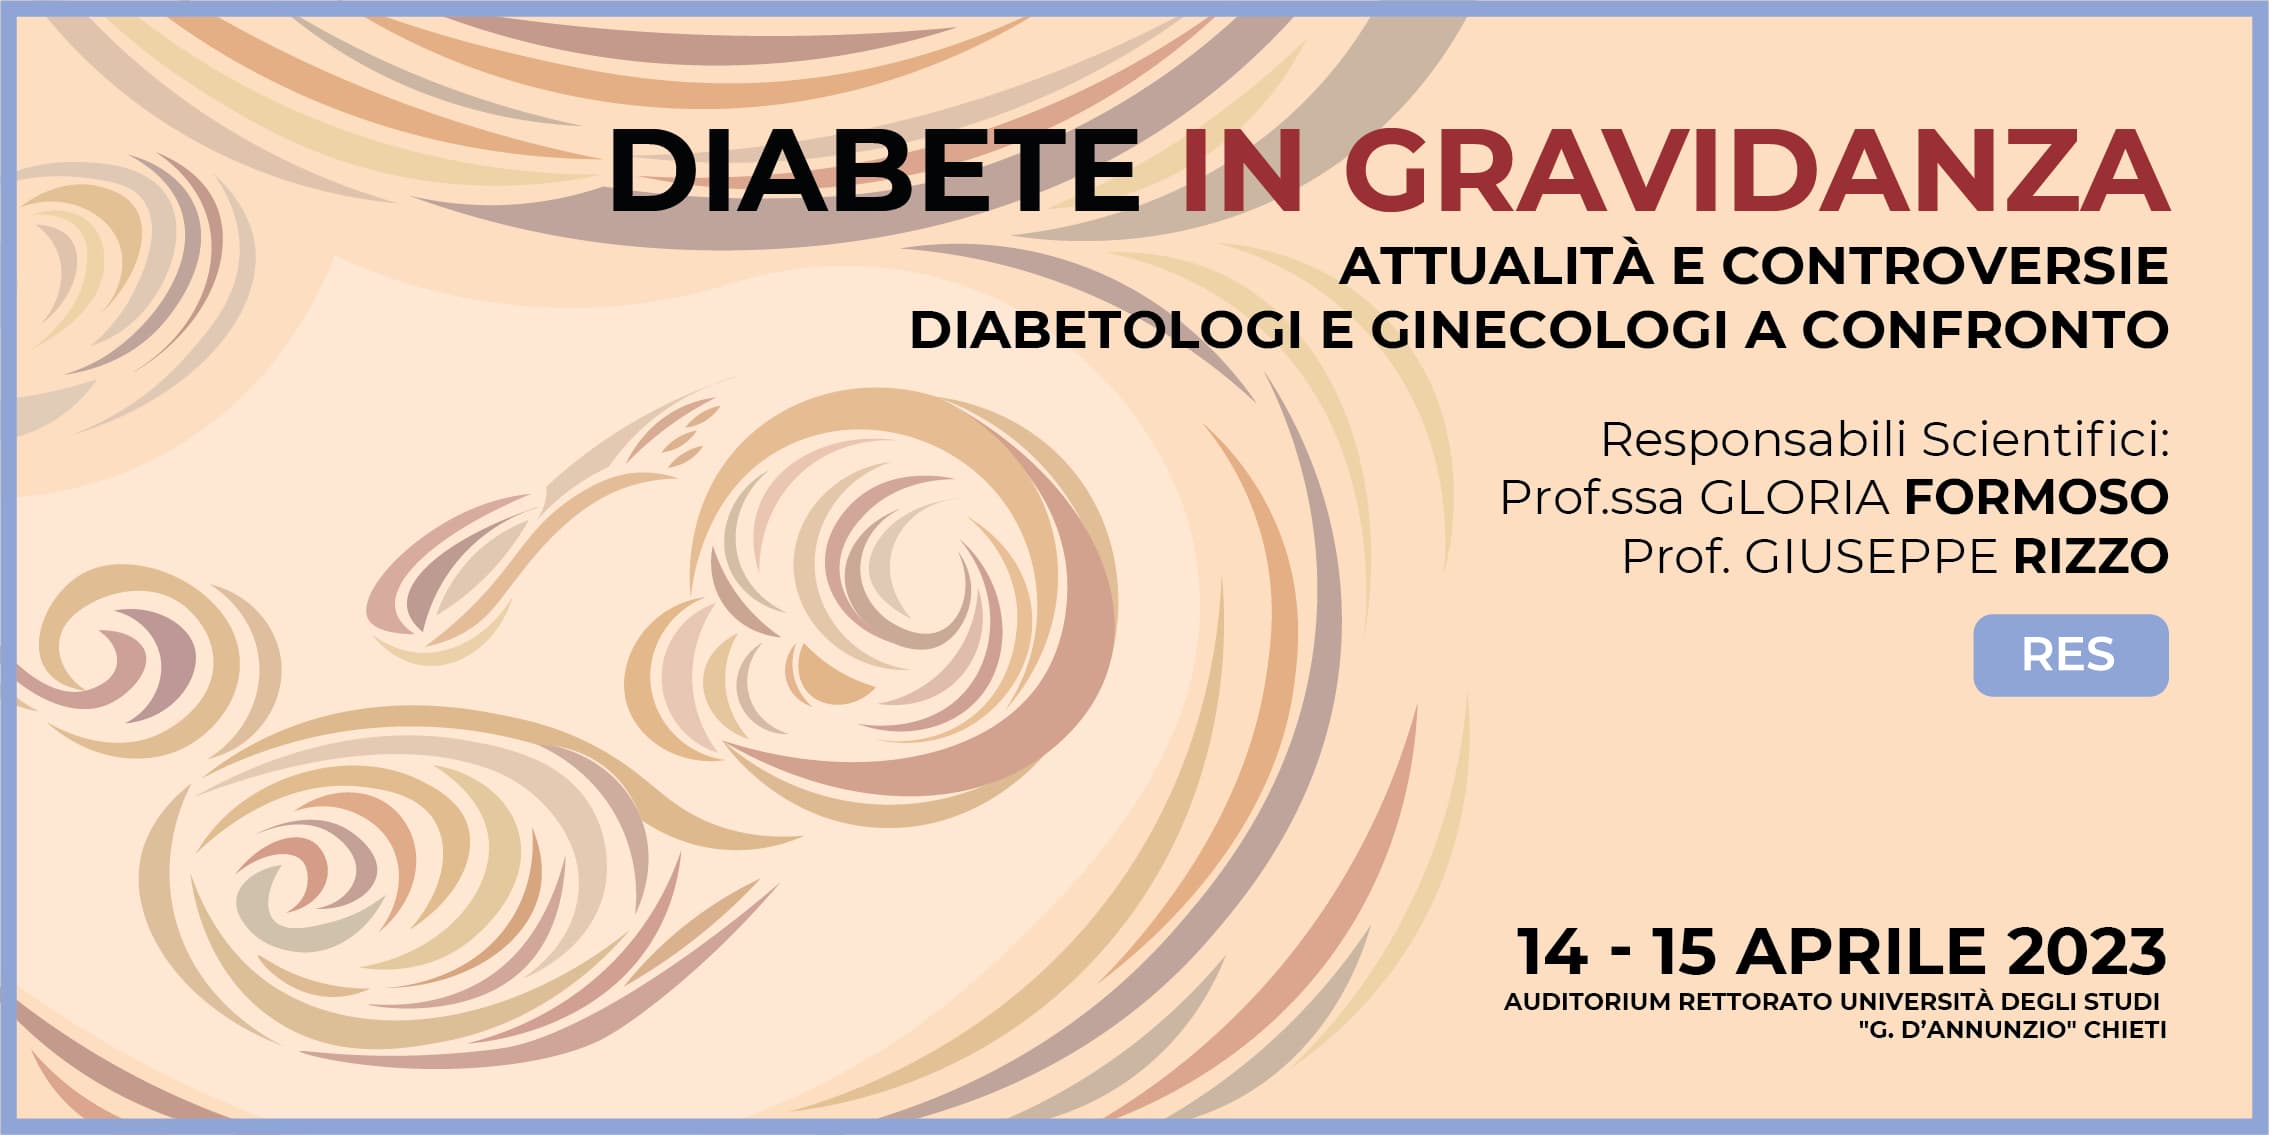 Diabete in gravidanza: attualità e controversie - Diabetologi e Ginecologi a confronto